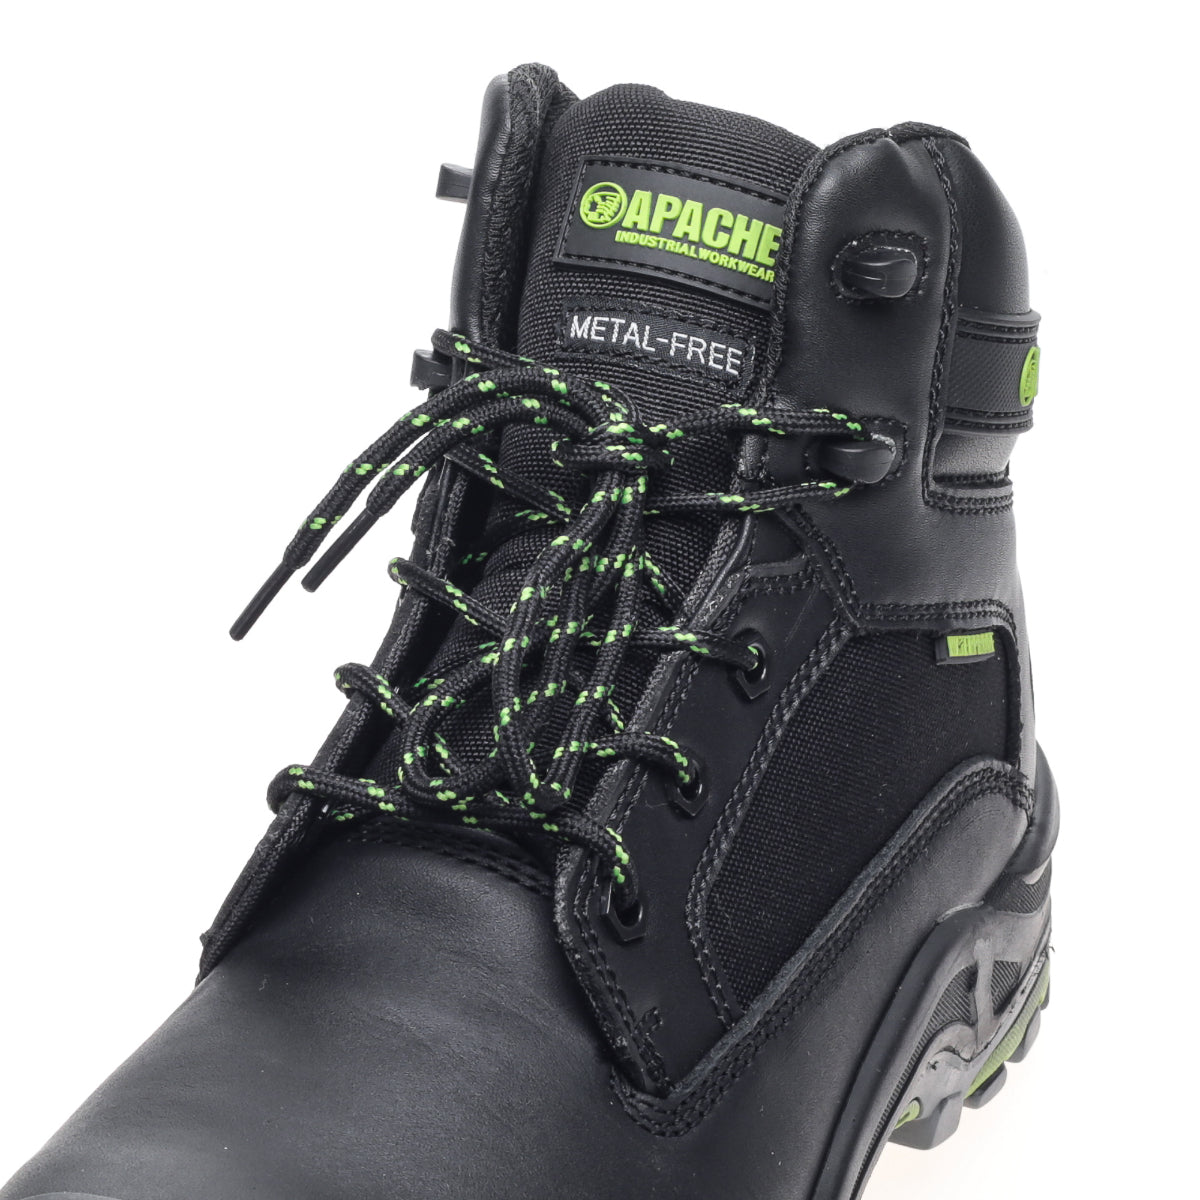 Apache Black Metal Free Waterproof Safety Boot